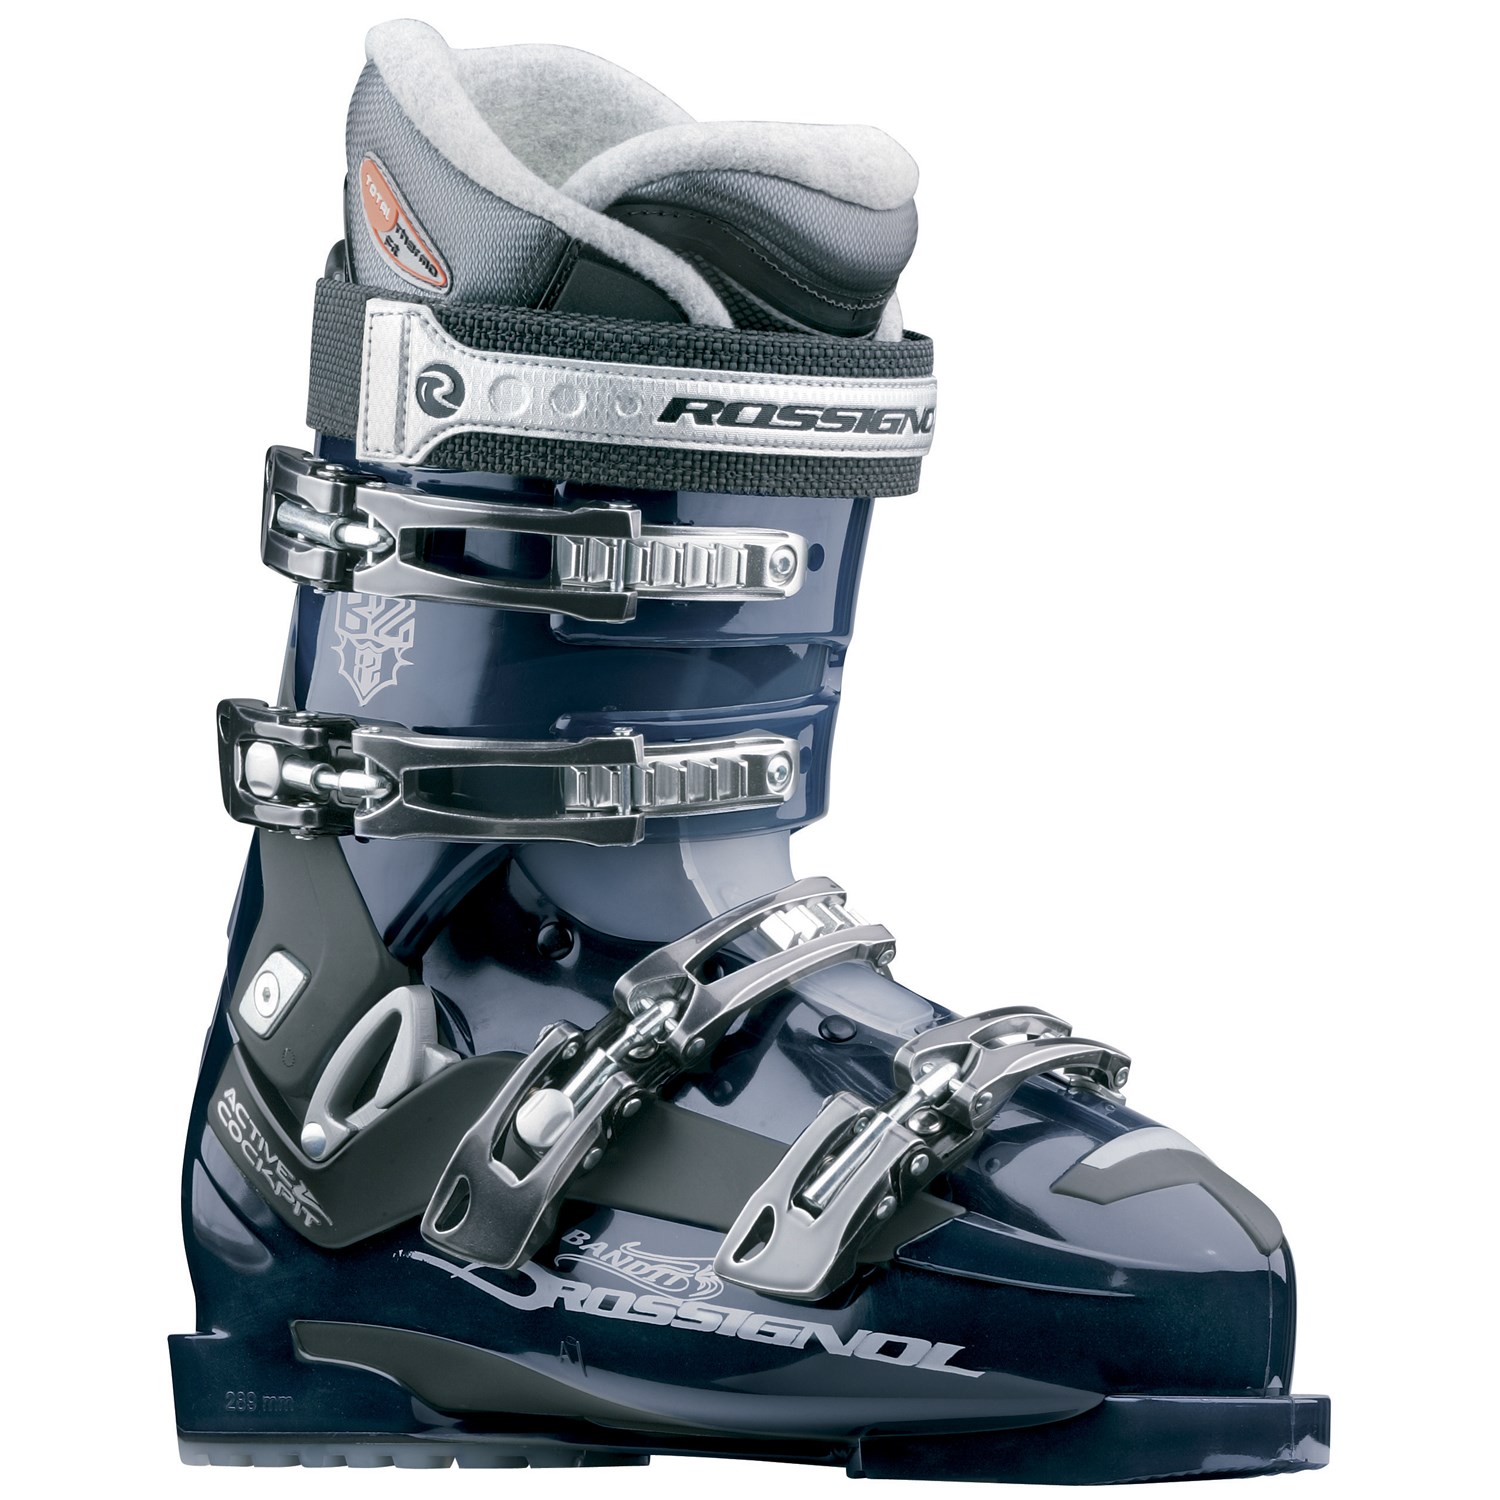 Ski Boot Size Chart 285mm